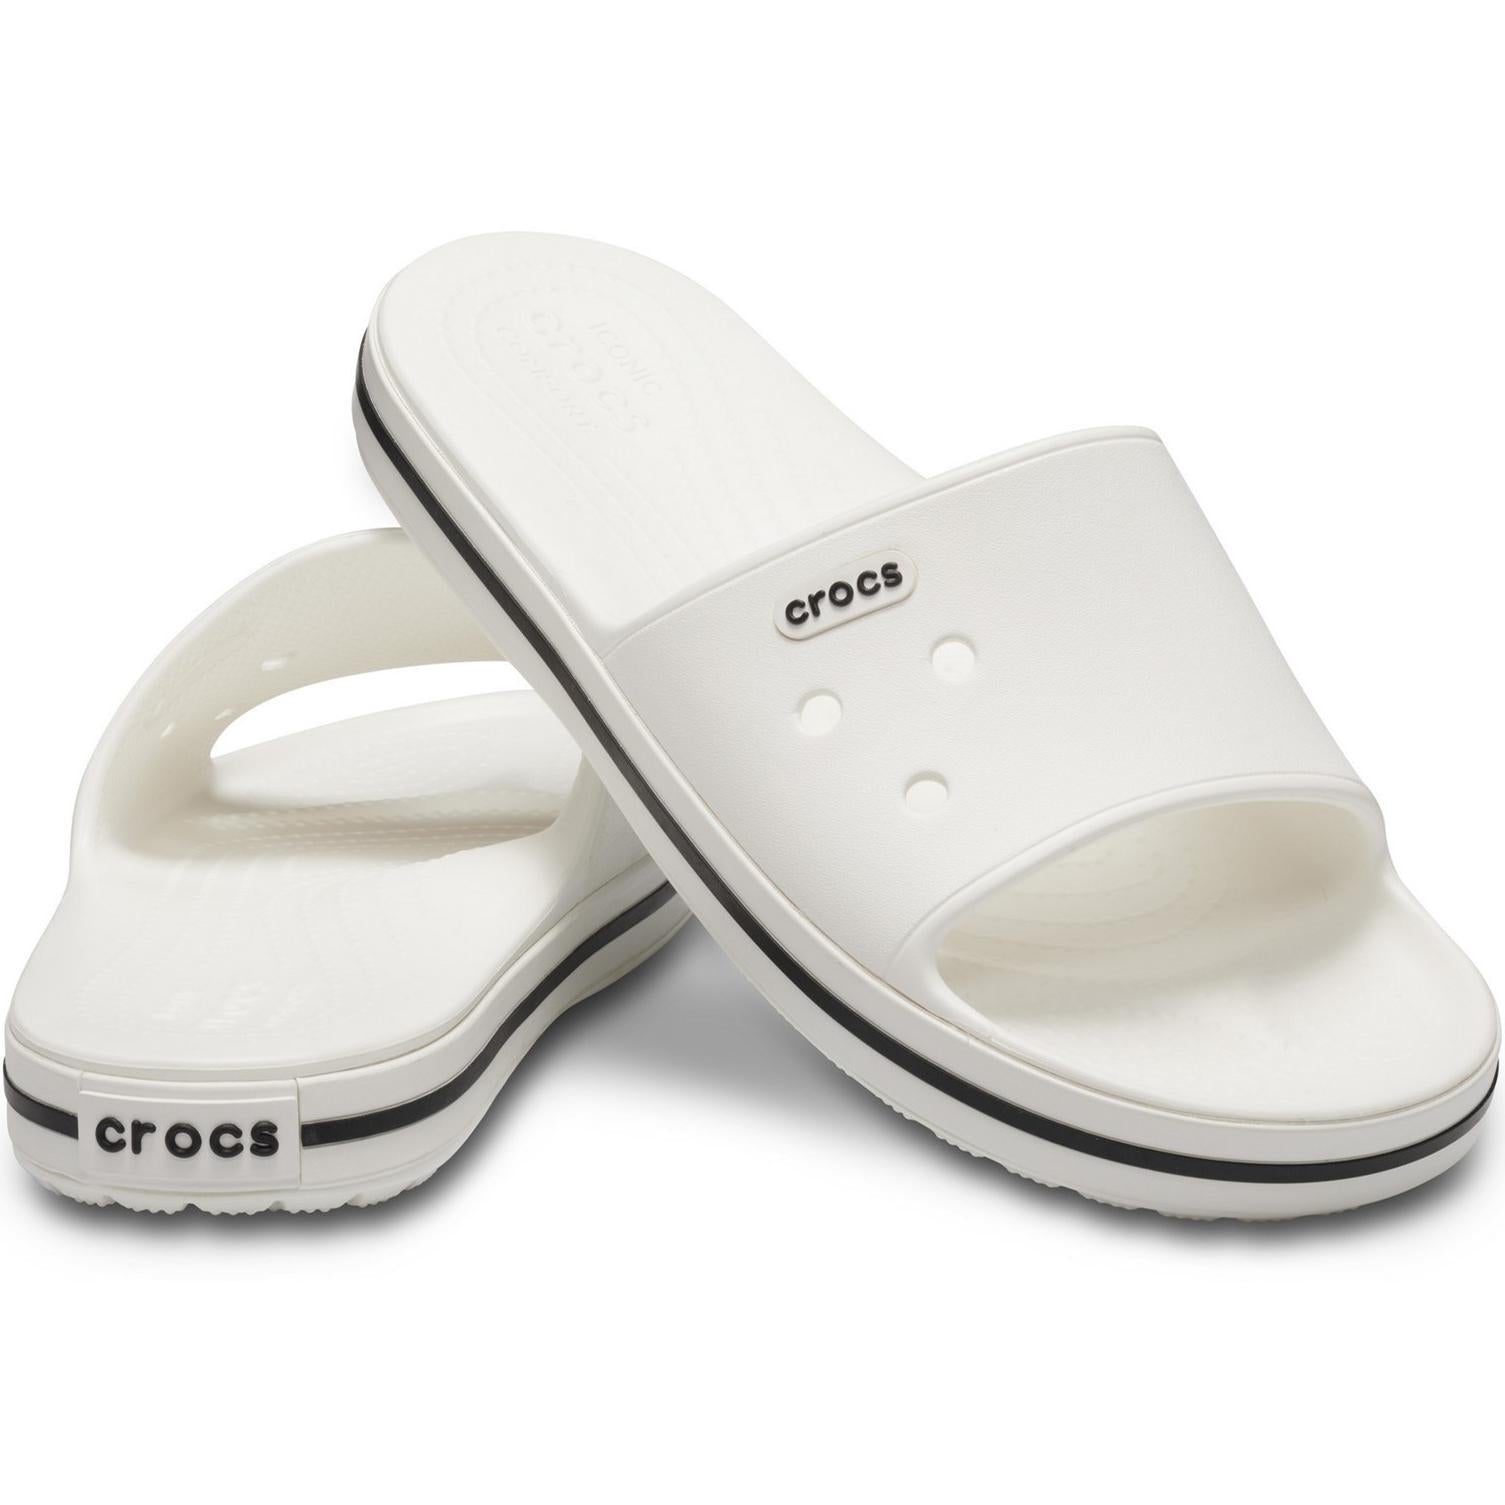 Crocs Crocband III Slide Slip On Sandals